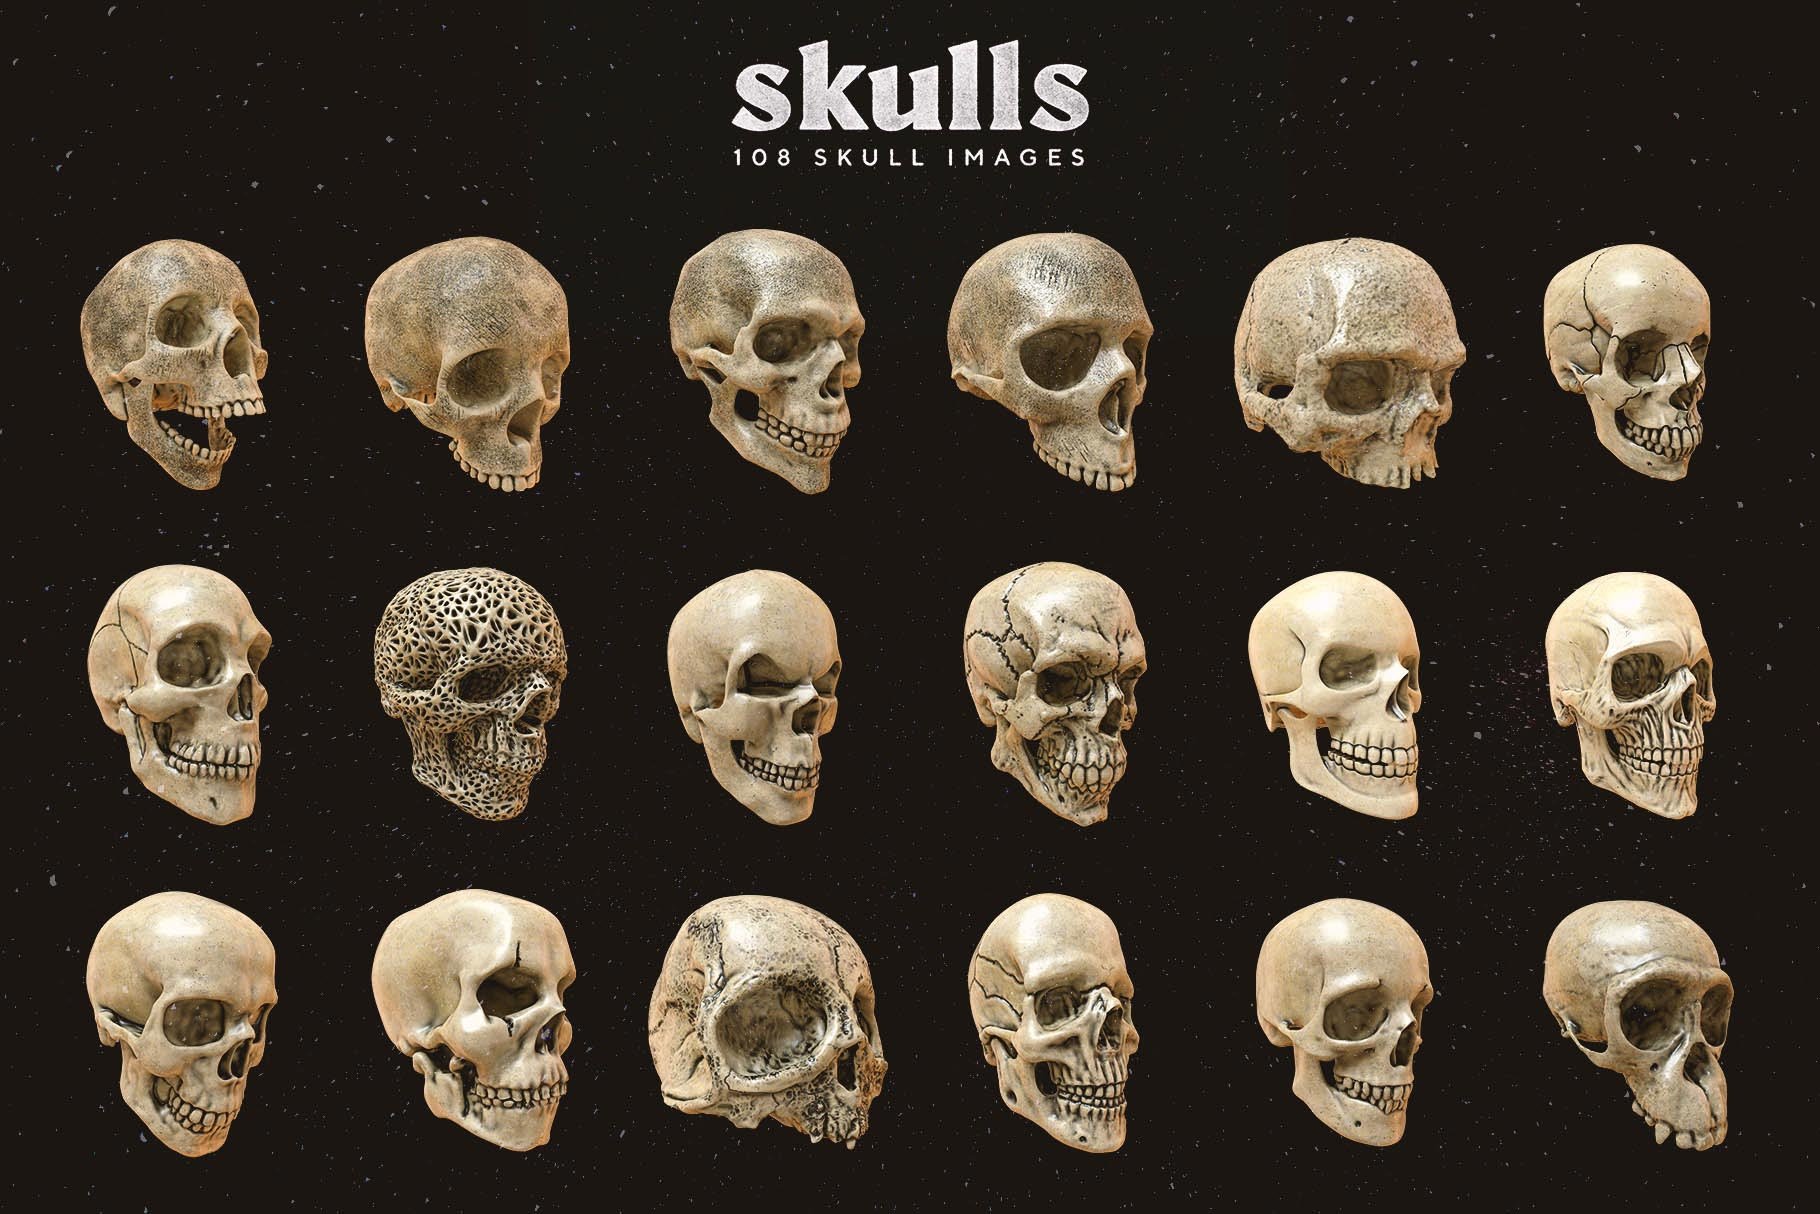 Skulls 108个高分辨率骷髅头骨逼真骨骼金属纹理PNG素材 图片素材 第4张